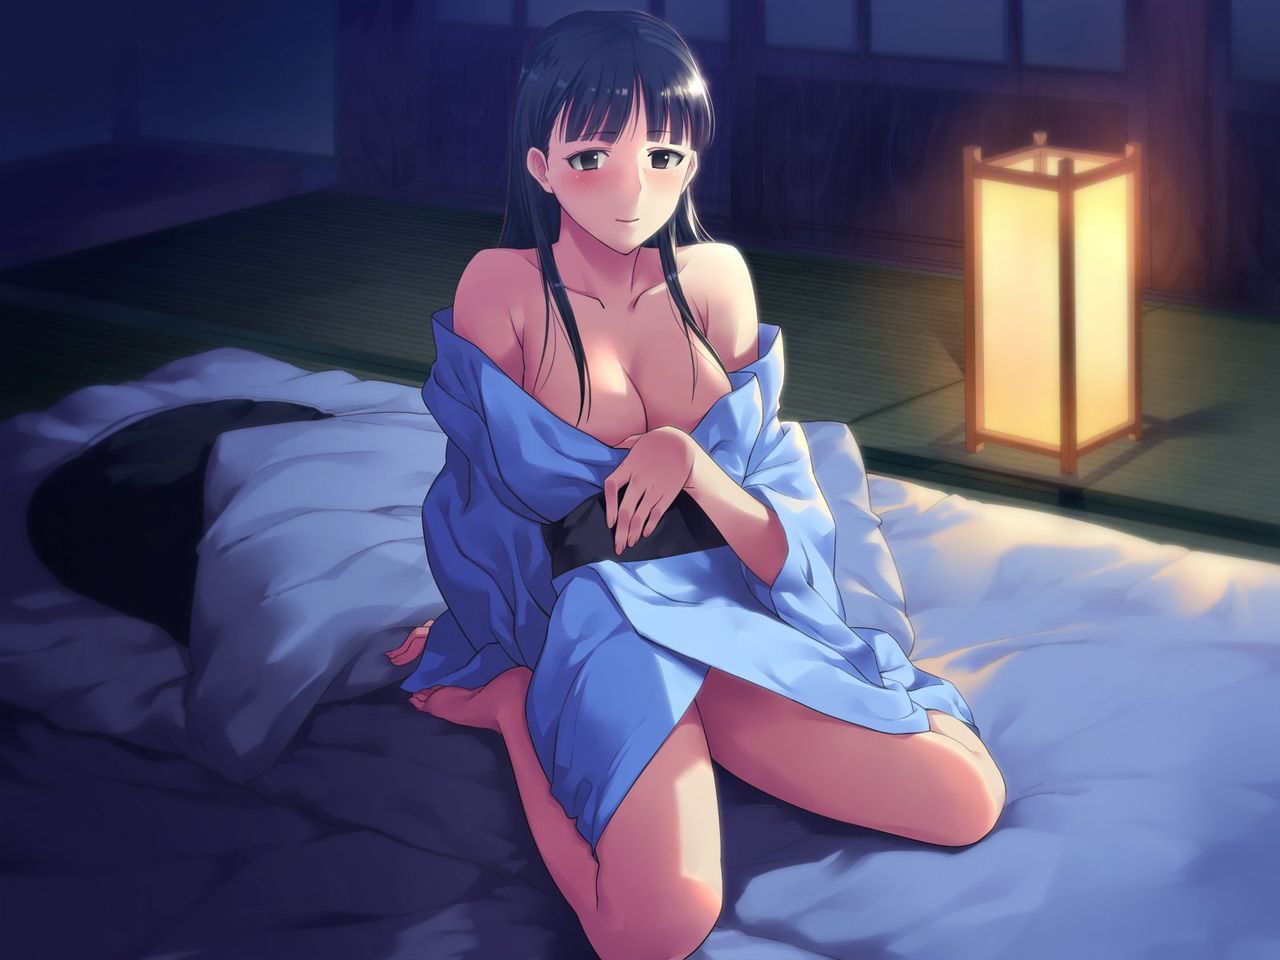 Please erotic image of a girl who was dressed in kimono or yukata or kimono is in lewd dress 8